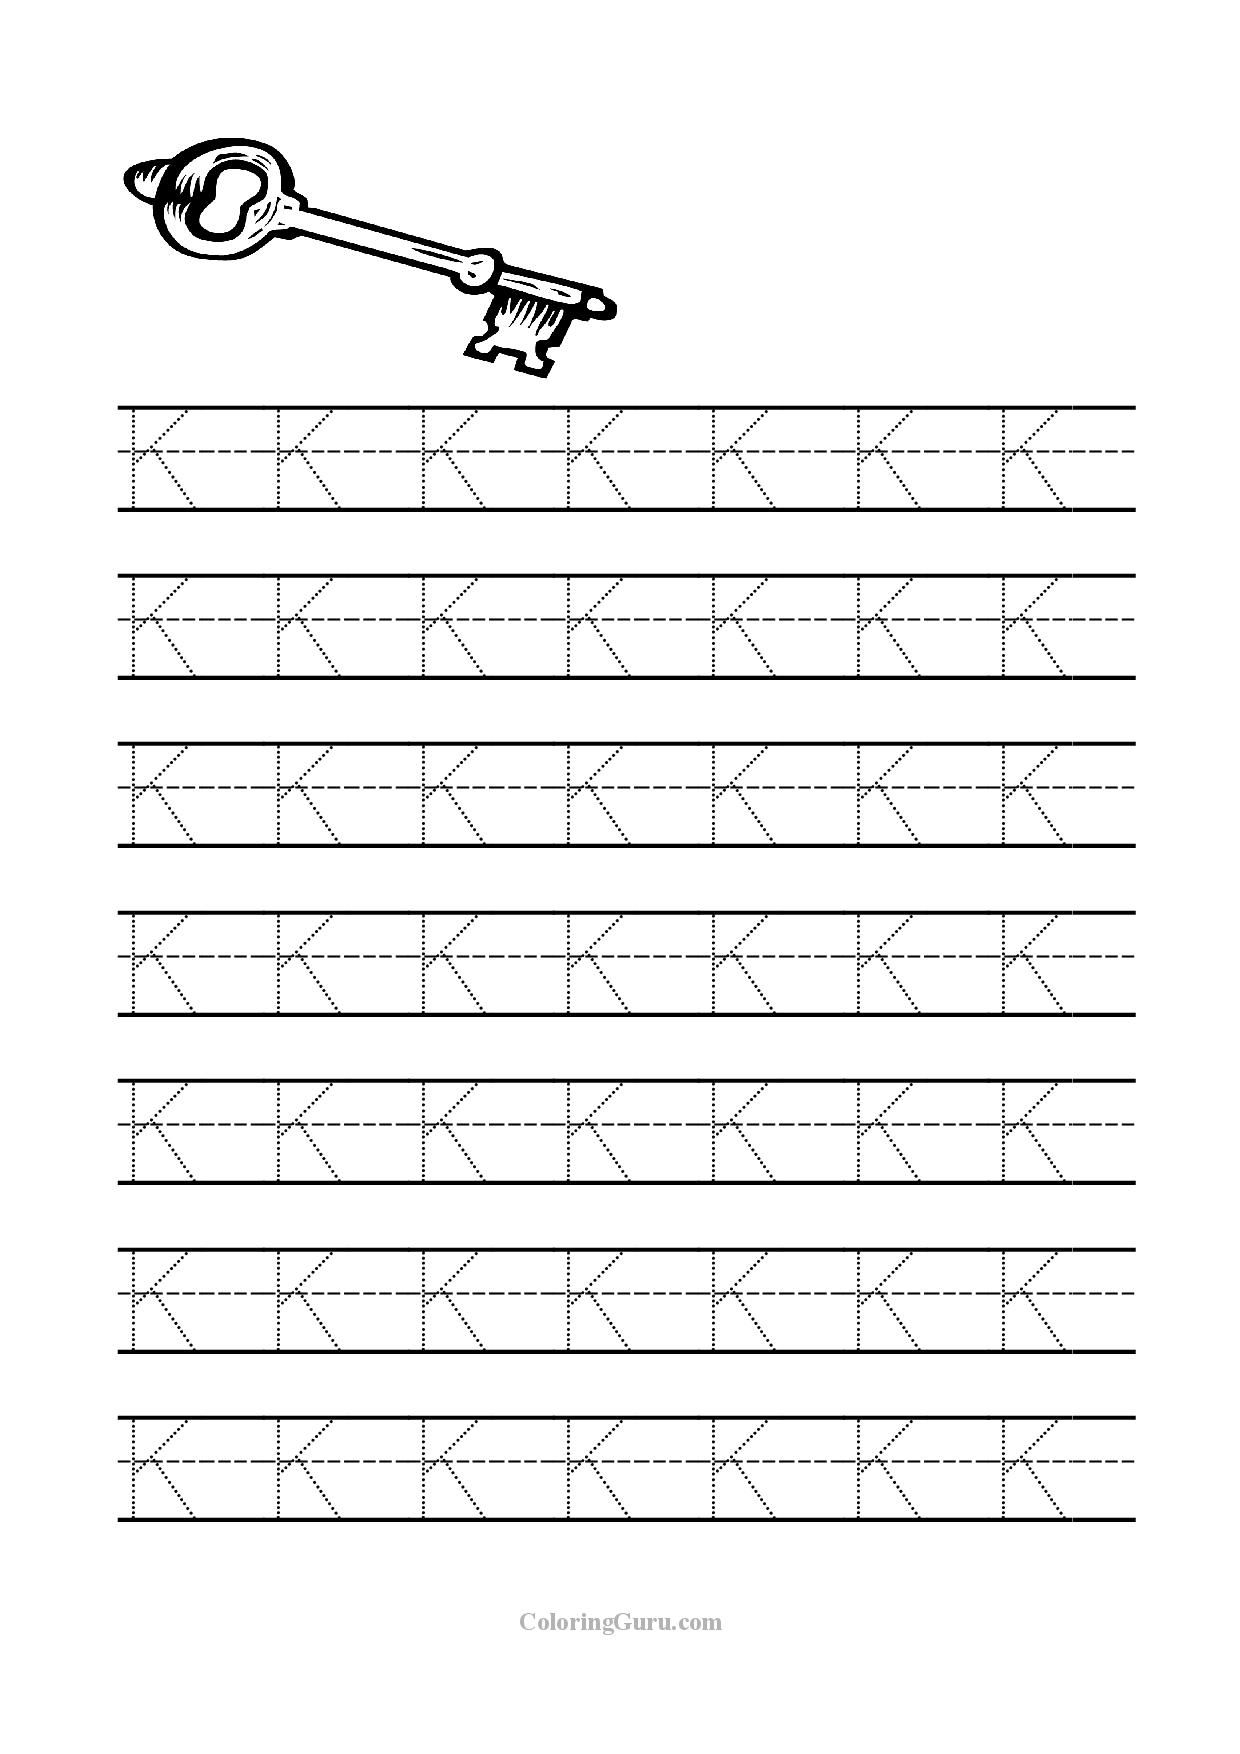 Free Printable Tracing Letter K Worksheets For Preschool intended for Alphabet K Tracing